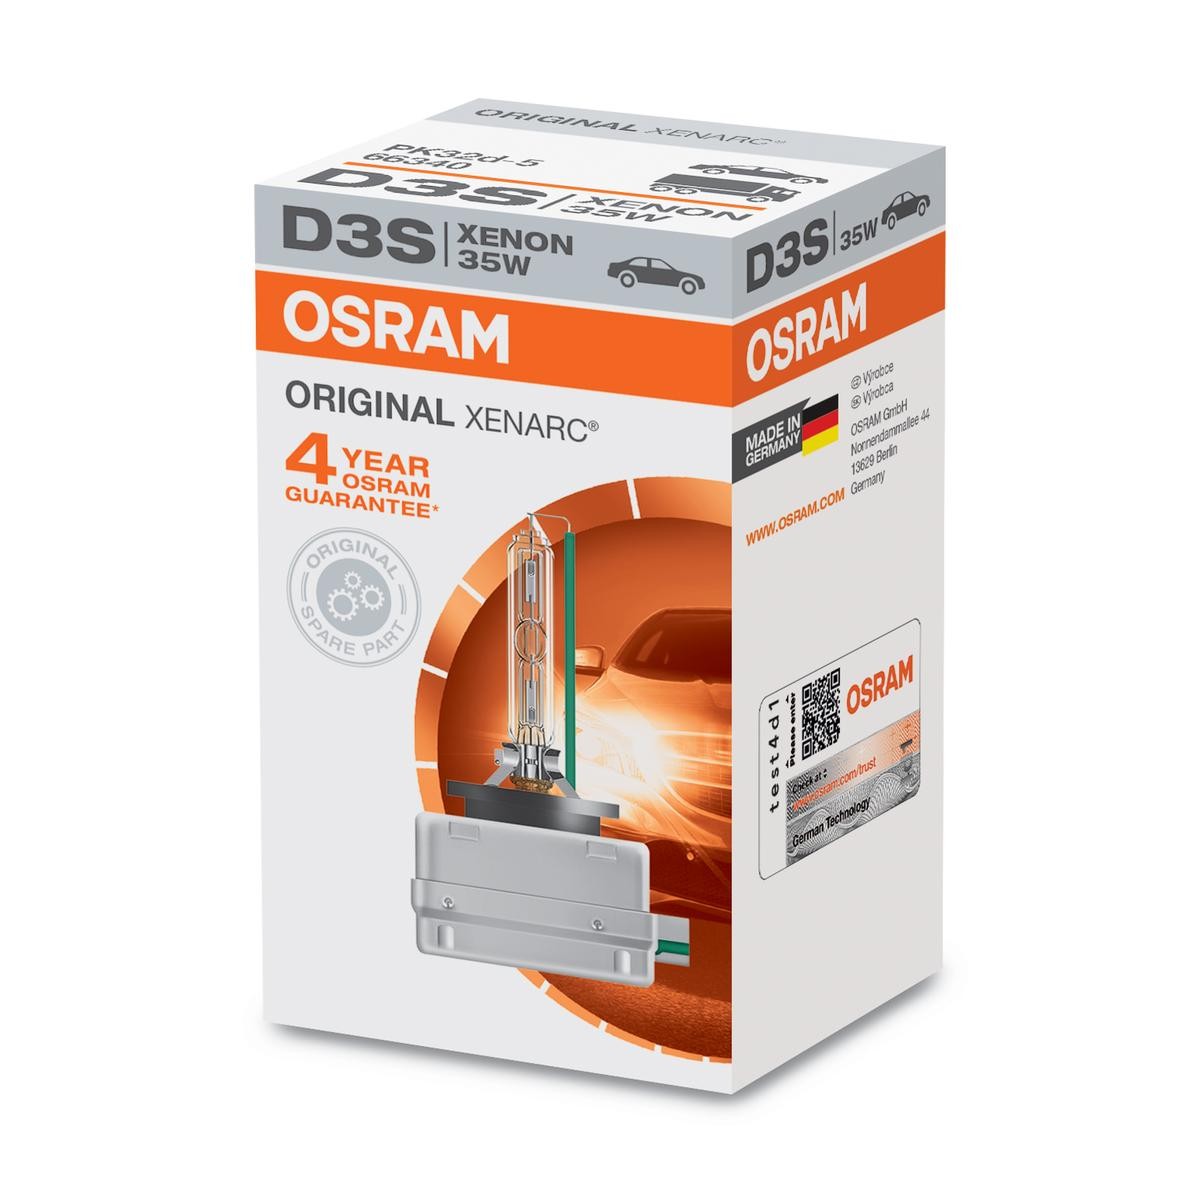 OSRAM XENARC ORIGINAL 66340 Λάμπα για προβολακια D3S (λυχνία εκκένωσης αερίου) 42V 35W4100K Ξένον